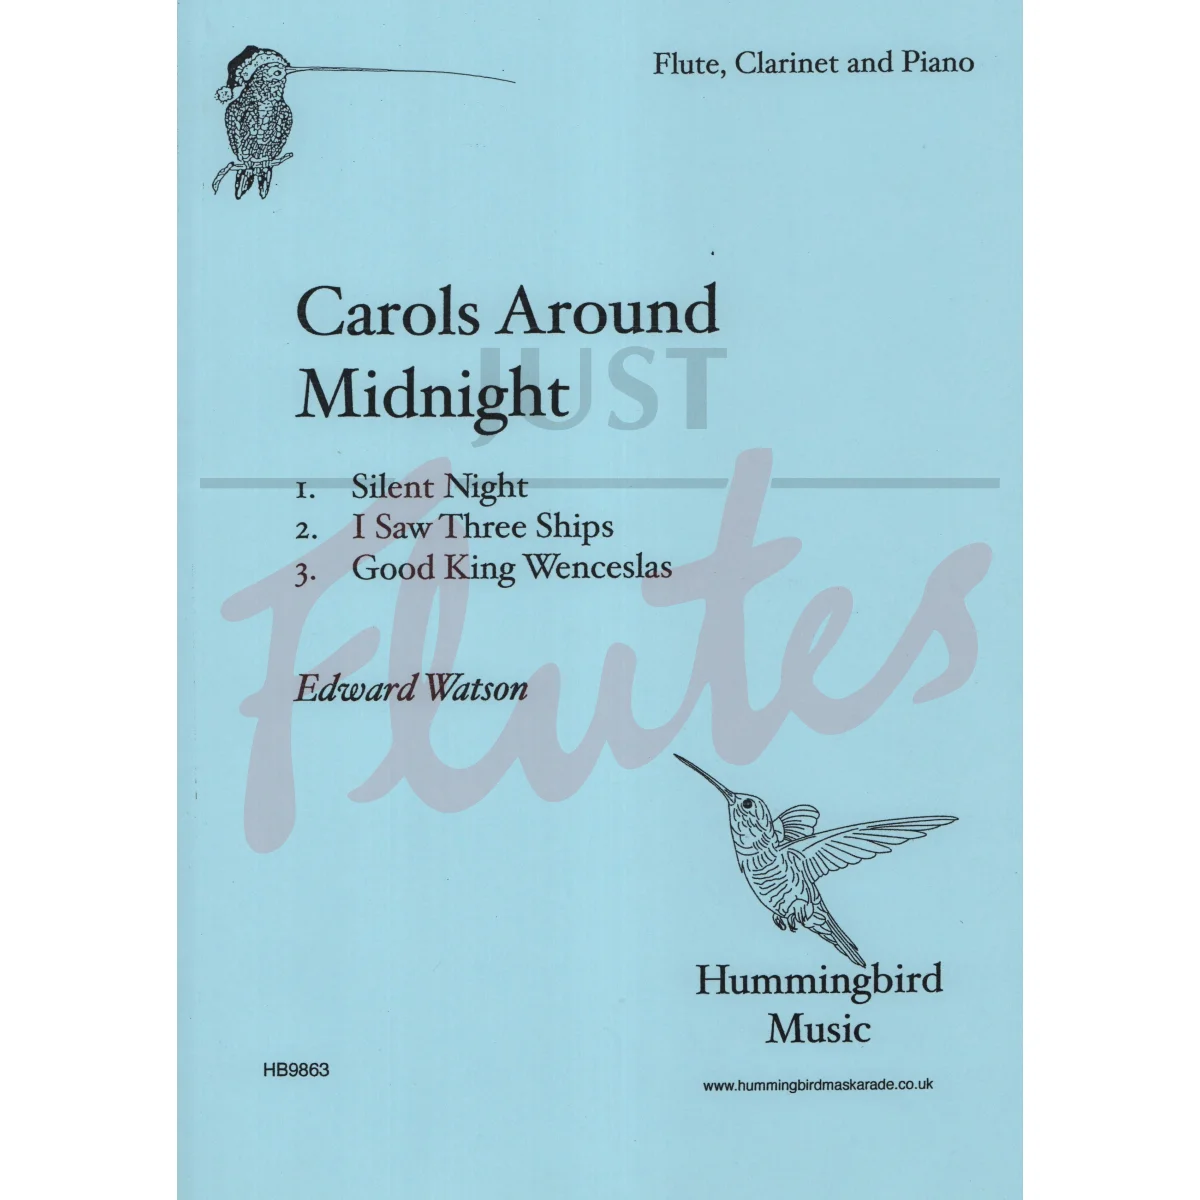 Carols Around Midnight for Flute, Clarinet and Piano